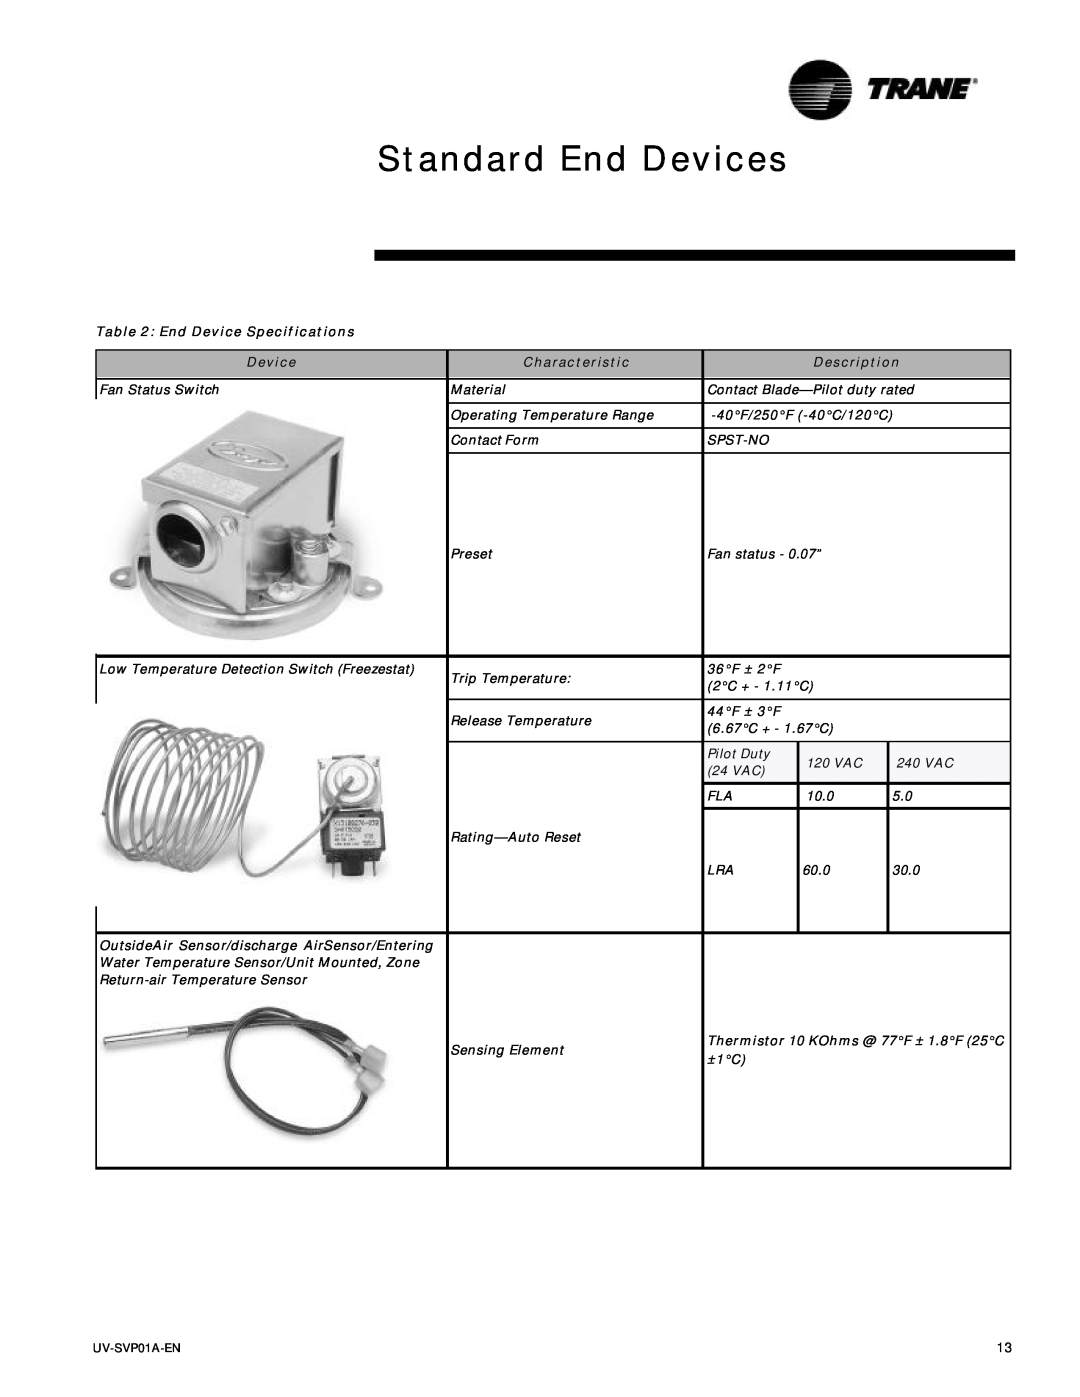 Trane ZN.520, Tracer Unit Ventilator Standard End Devices, End Device Specifications Device, Characteristic, Description 